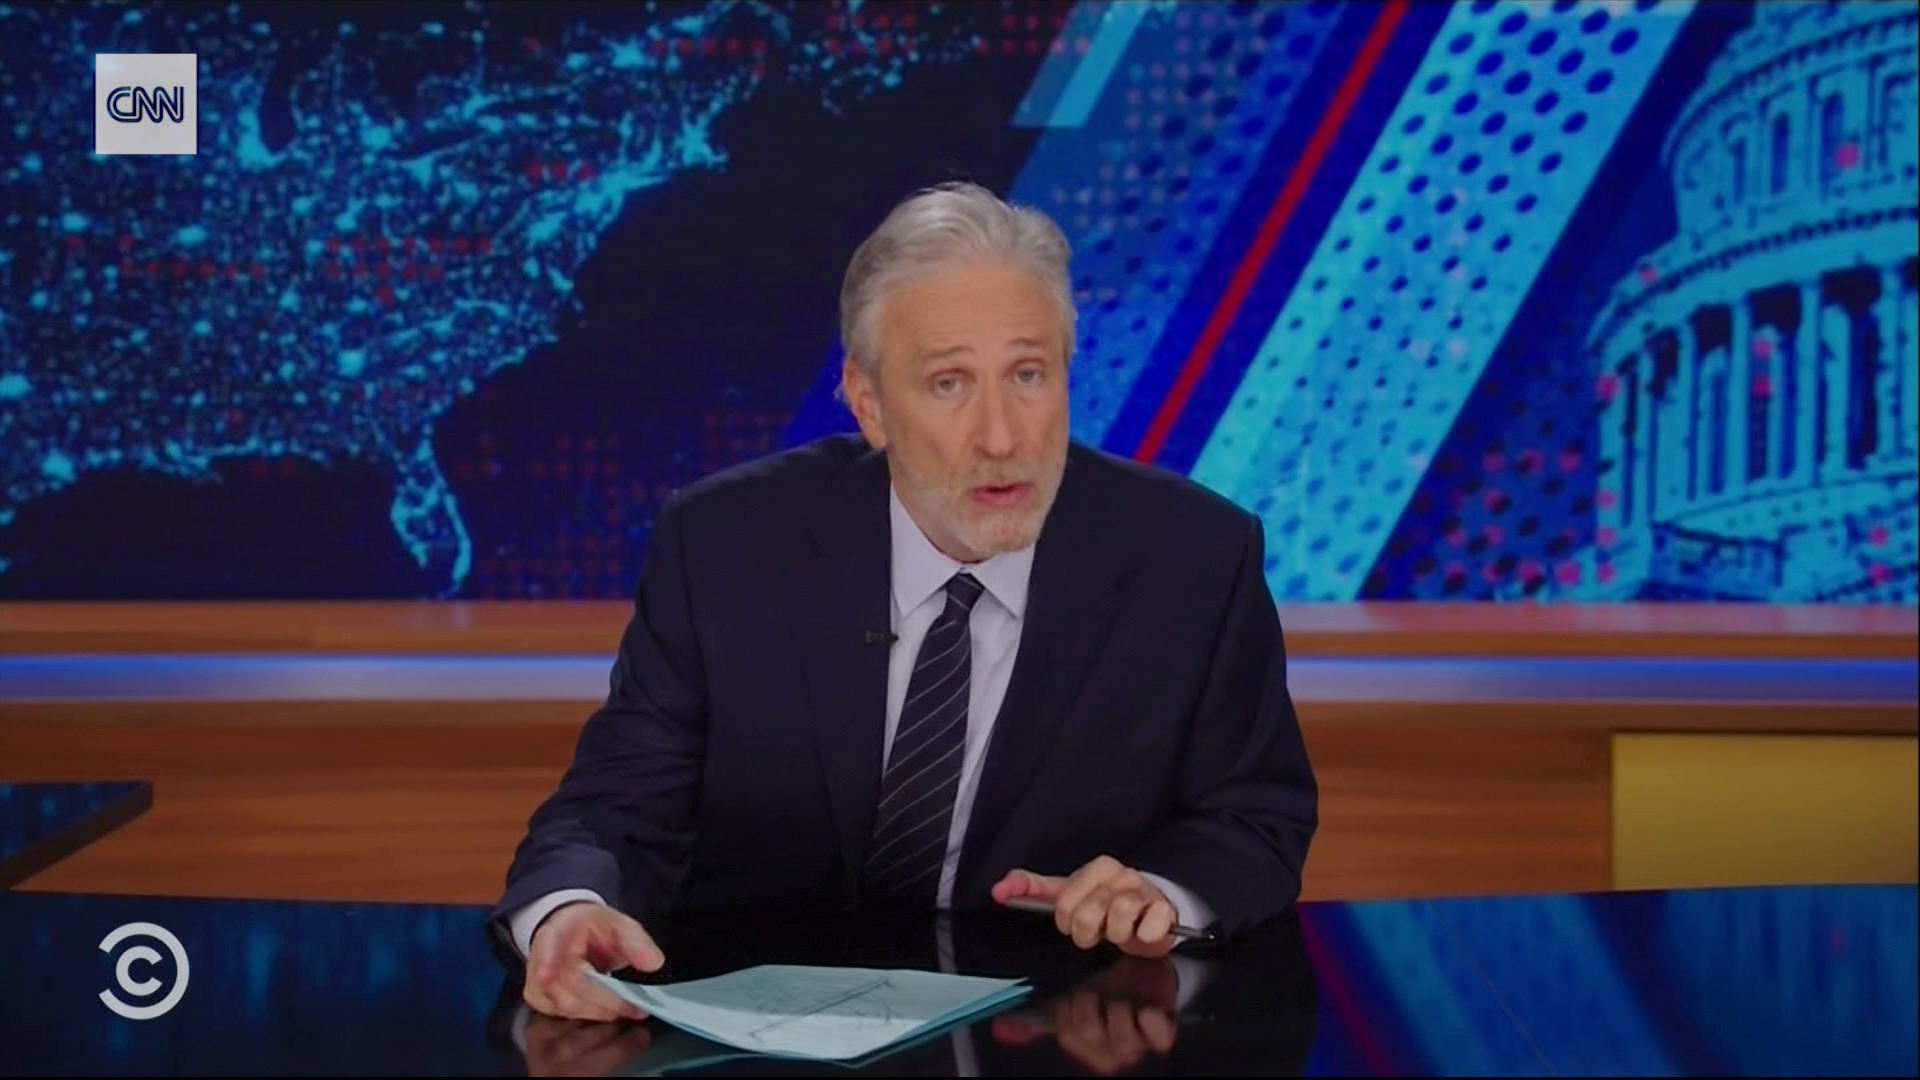 Jon Stewart covers Iran’s attack on Israel